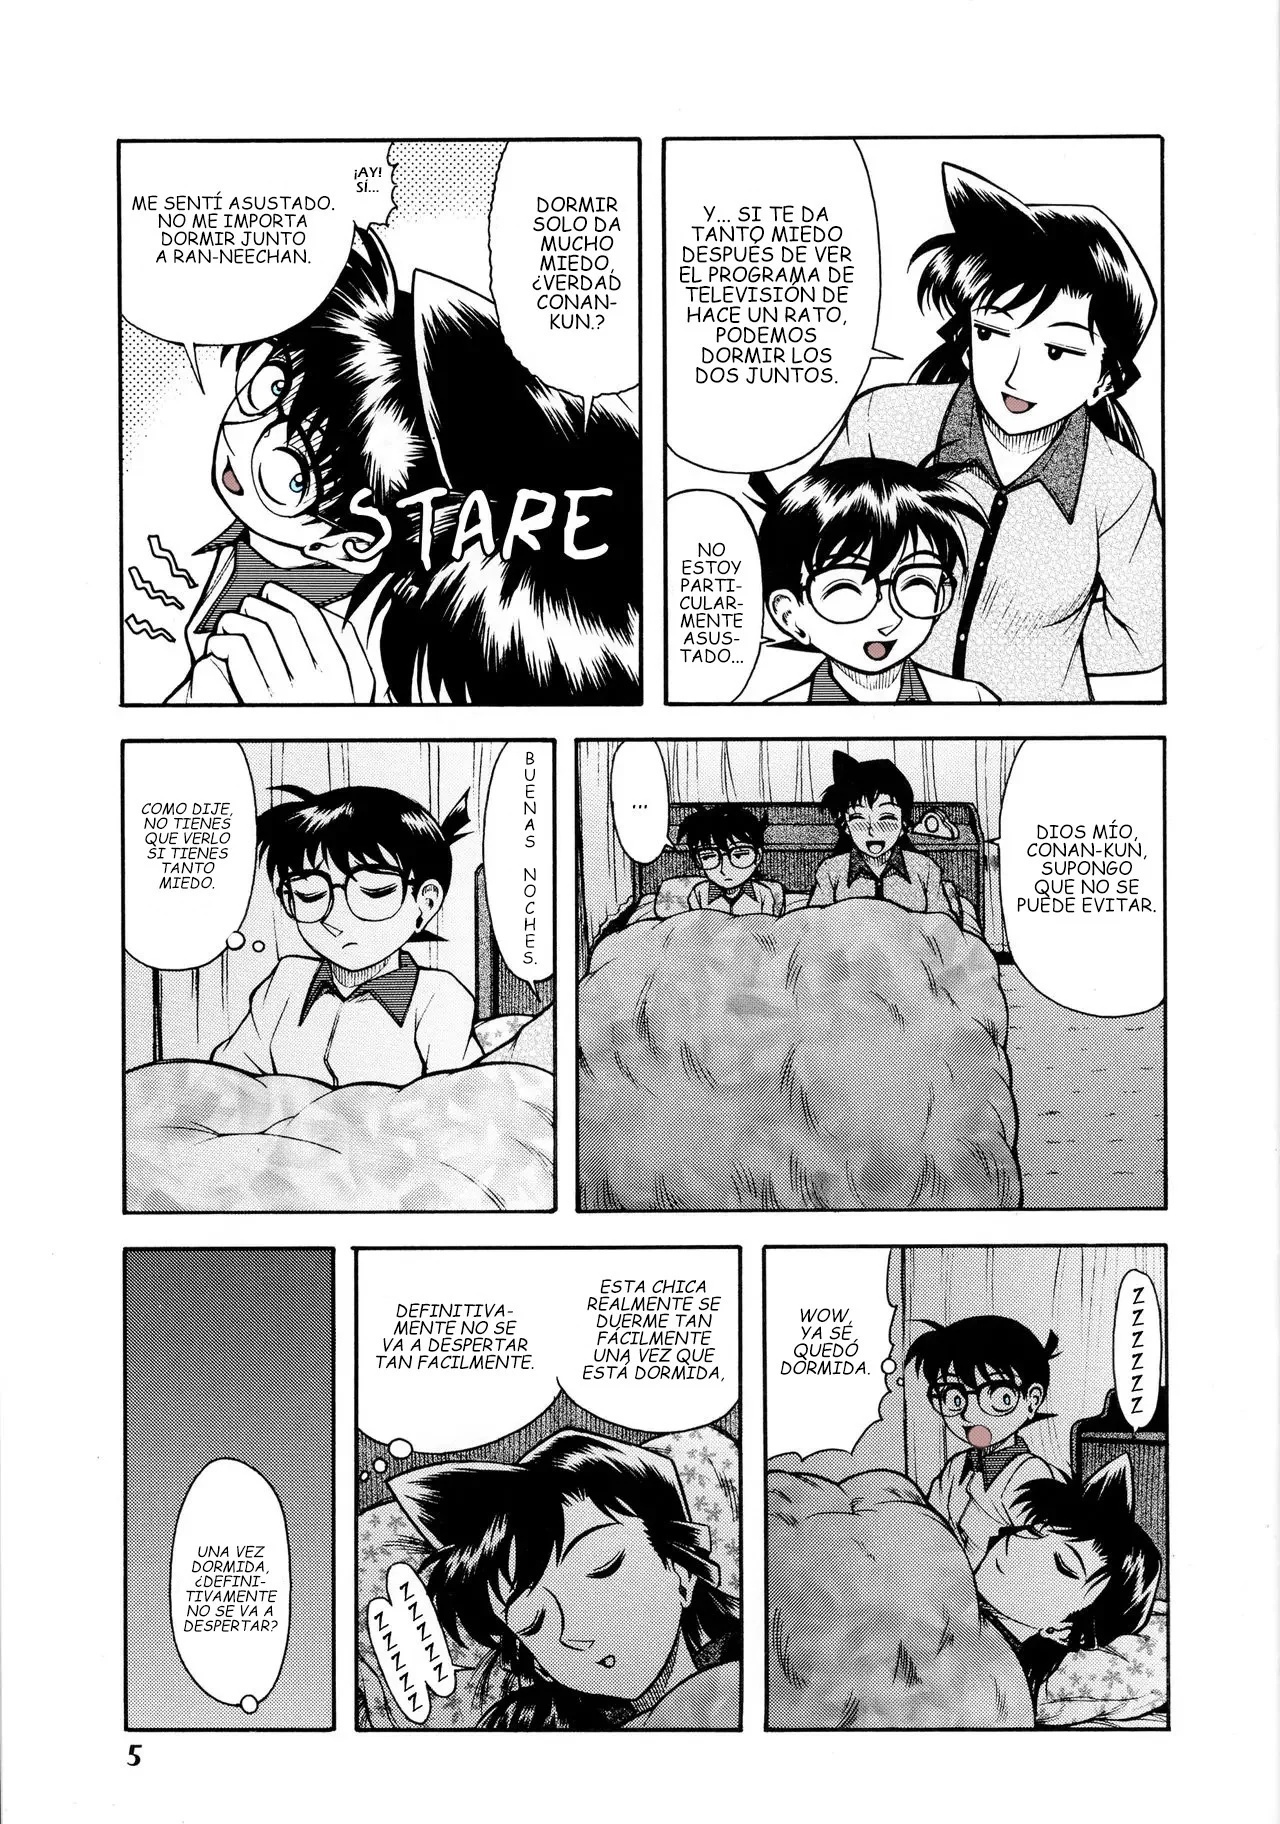 Detective Conan - Ran-neechan to Issho - 3